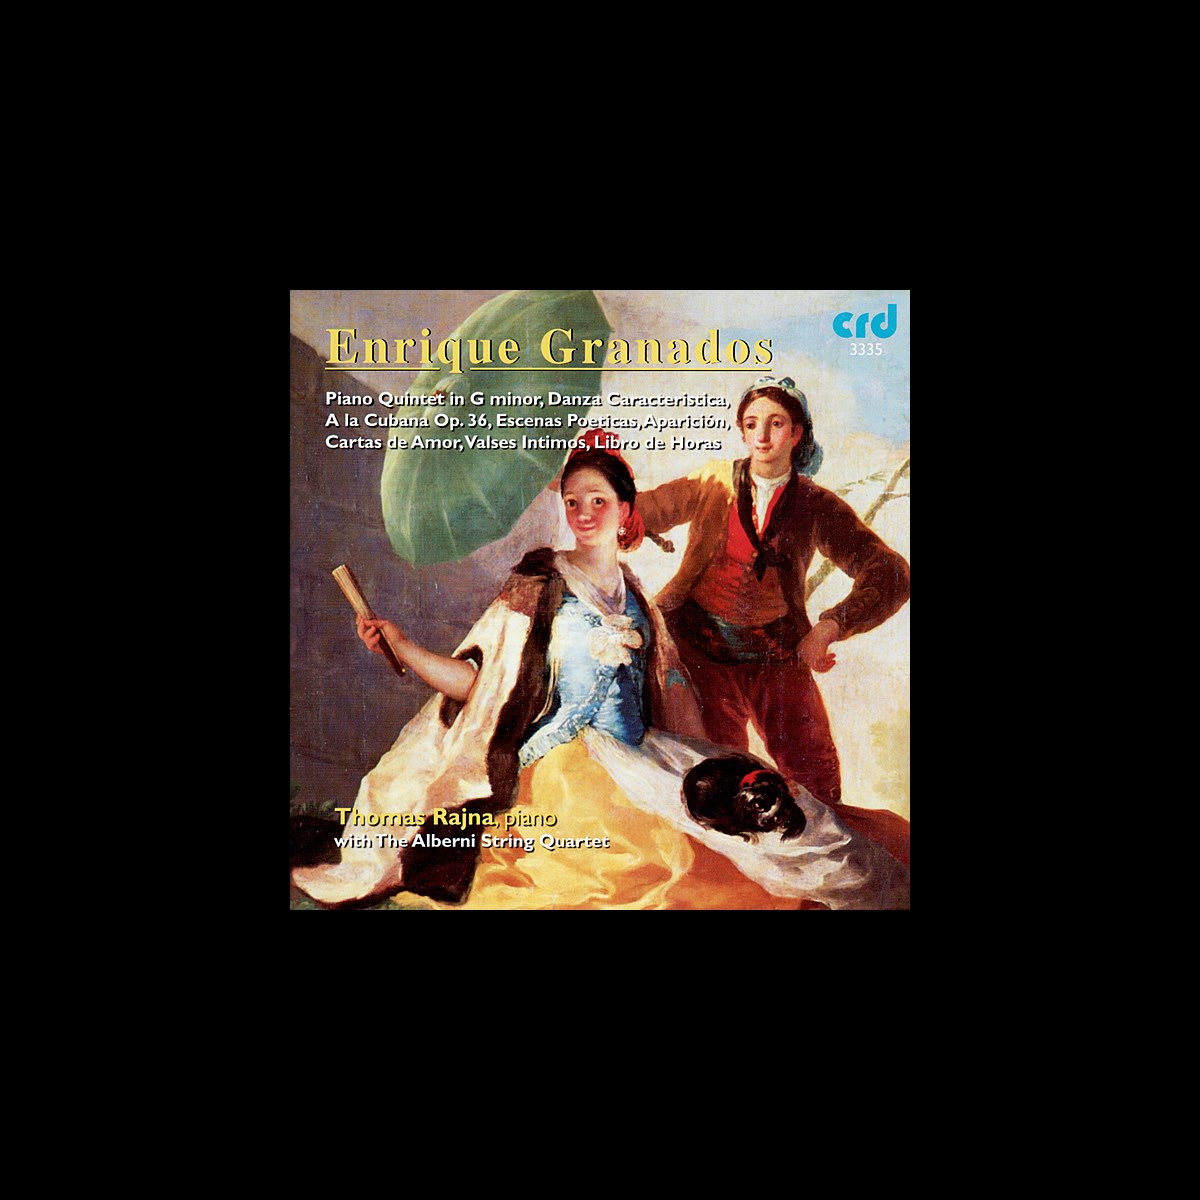 Granados: Piano Quintet In G Minor, Danza Caracteristica, a la Cubana  Op.36, Etc by Thomas Rajna & The Alberni String Quartet on Apple Music